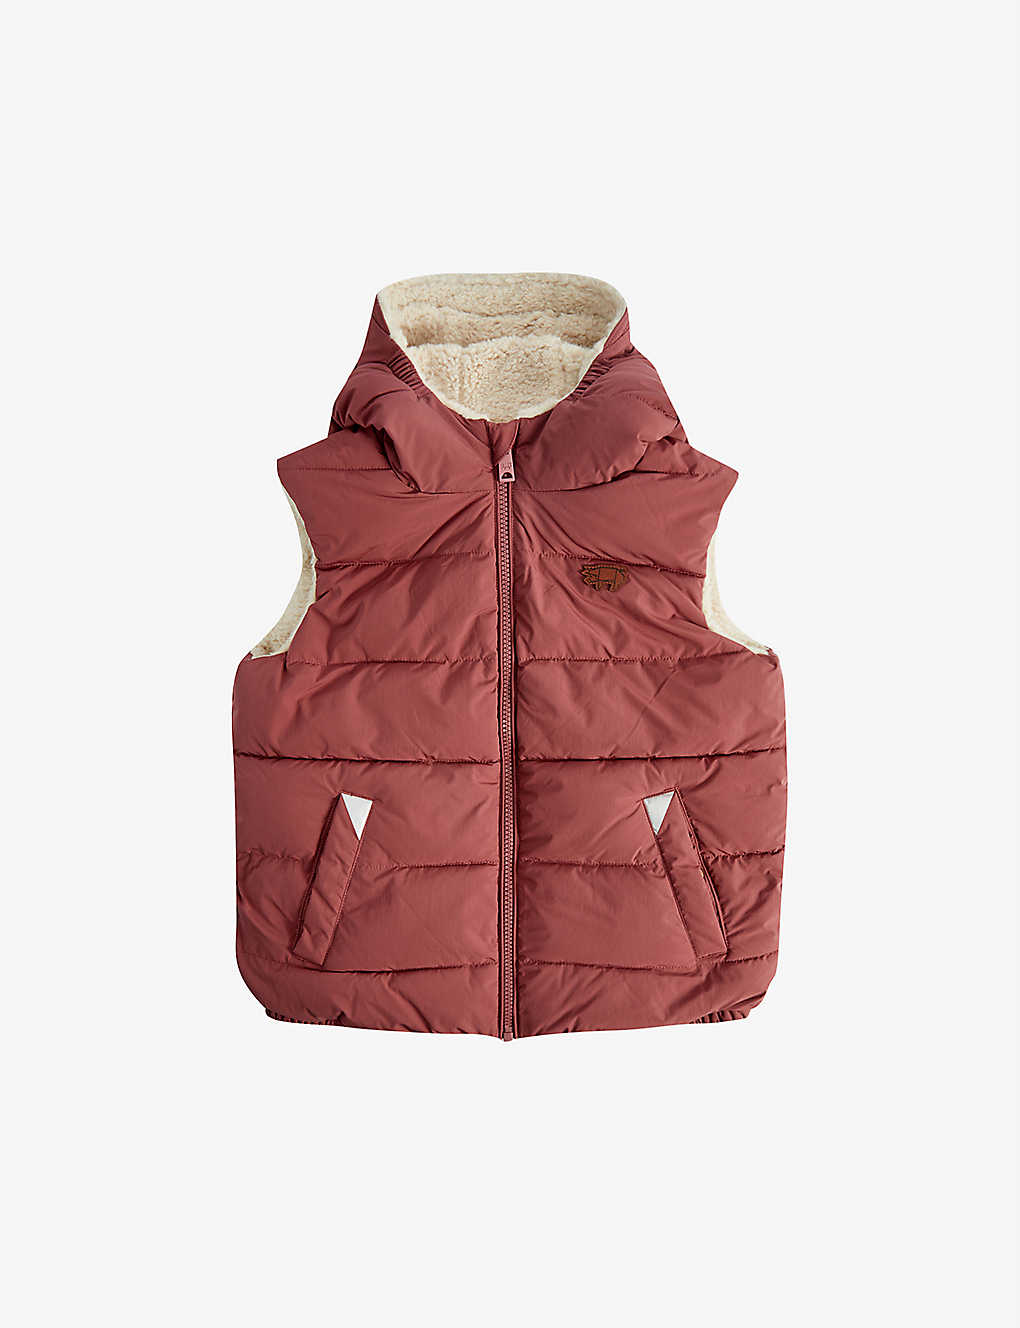 Sherpa reversible shell gilet 1-10 years Selfridges & Co Boys Clothing Jackets Gilets 